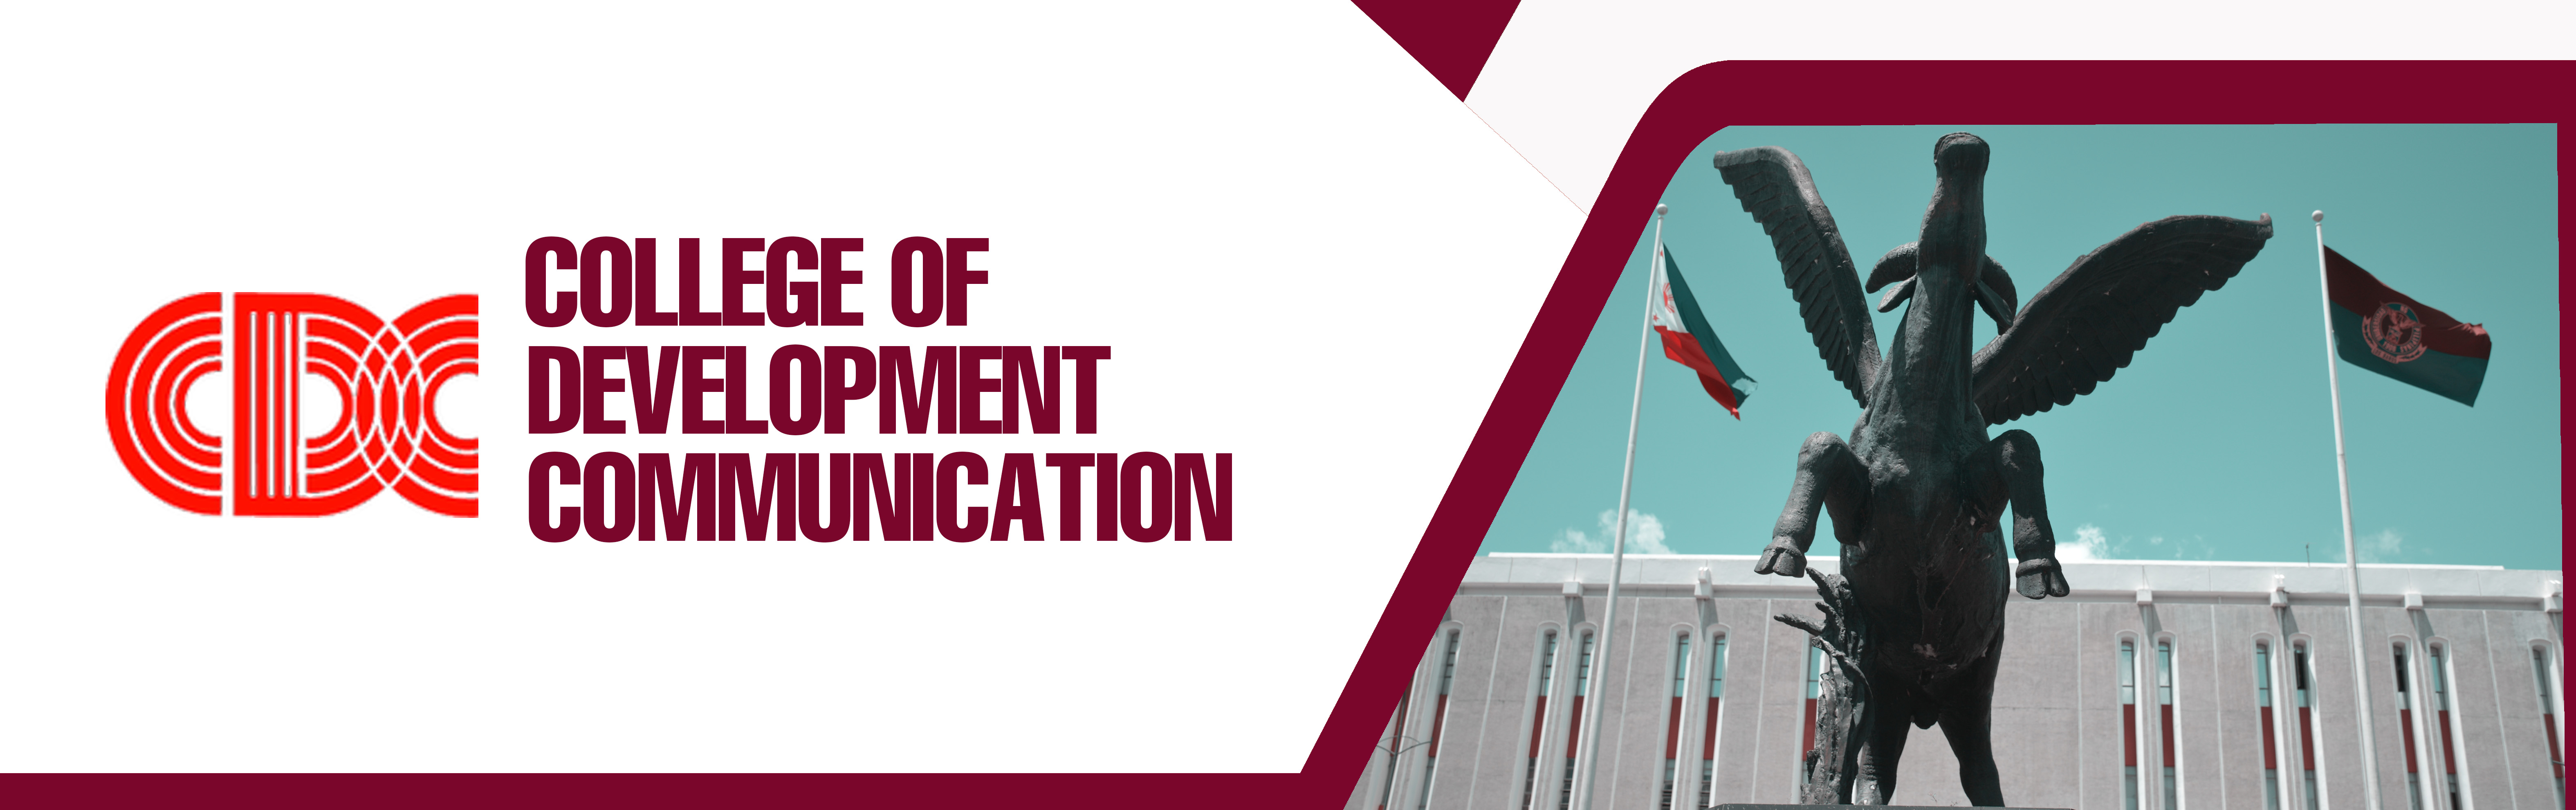 College of Development Communication (CDC)